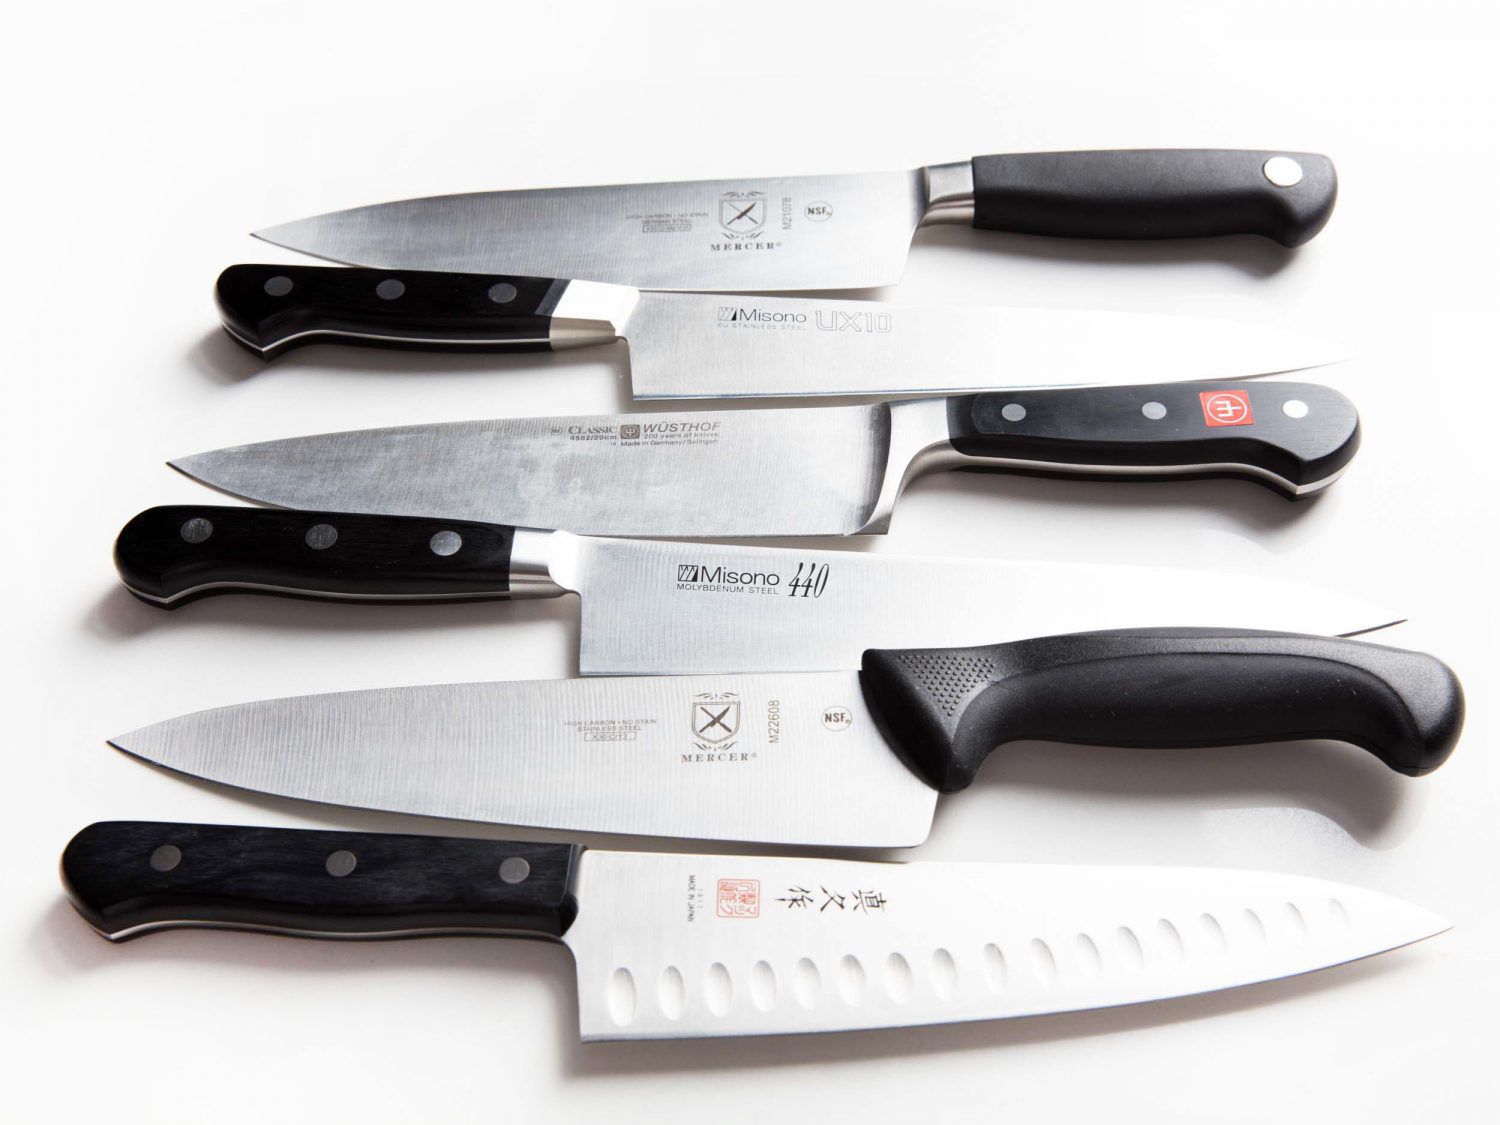 noze kuchenne ranking - jakie noże do kuchni - najlepsza stal na noże - najlepsze noże kuchenne